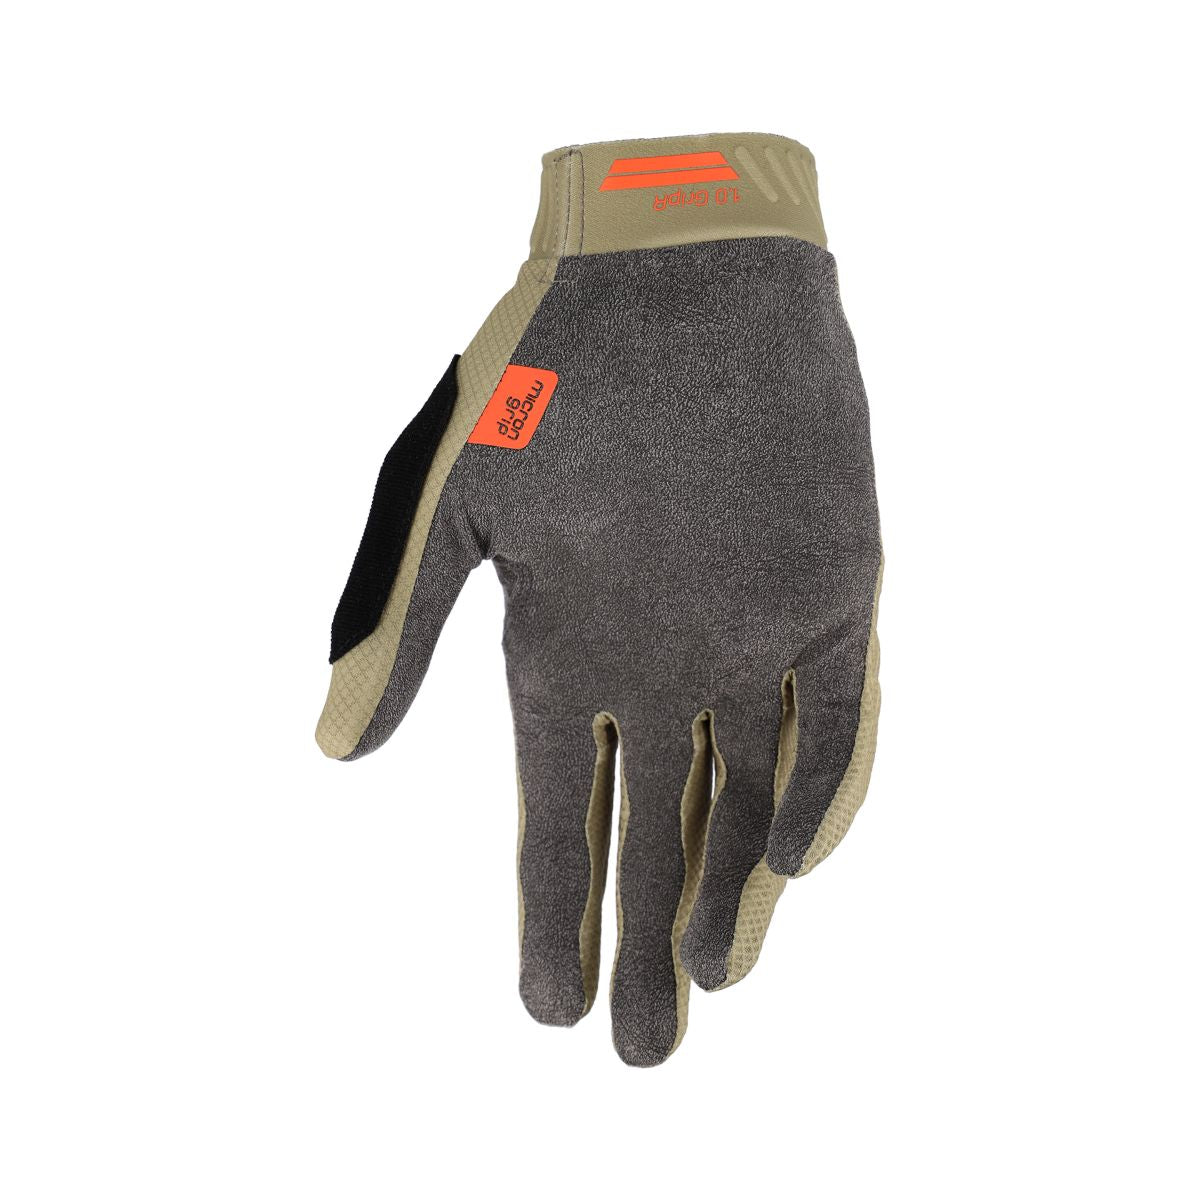 Leatt Protection Glove Mtb 1.0 Gripr Dune M in Dune